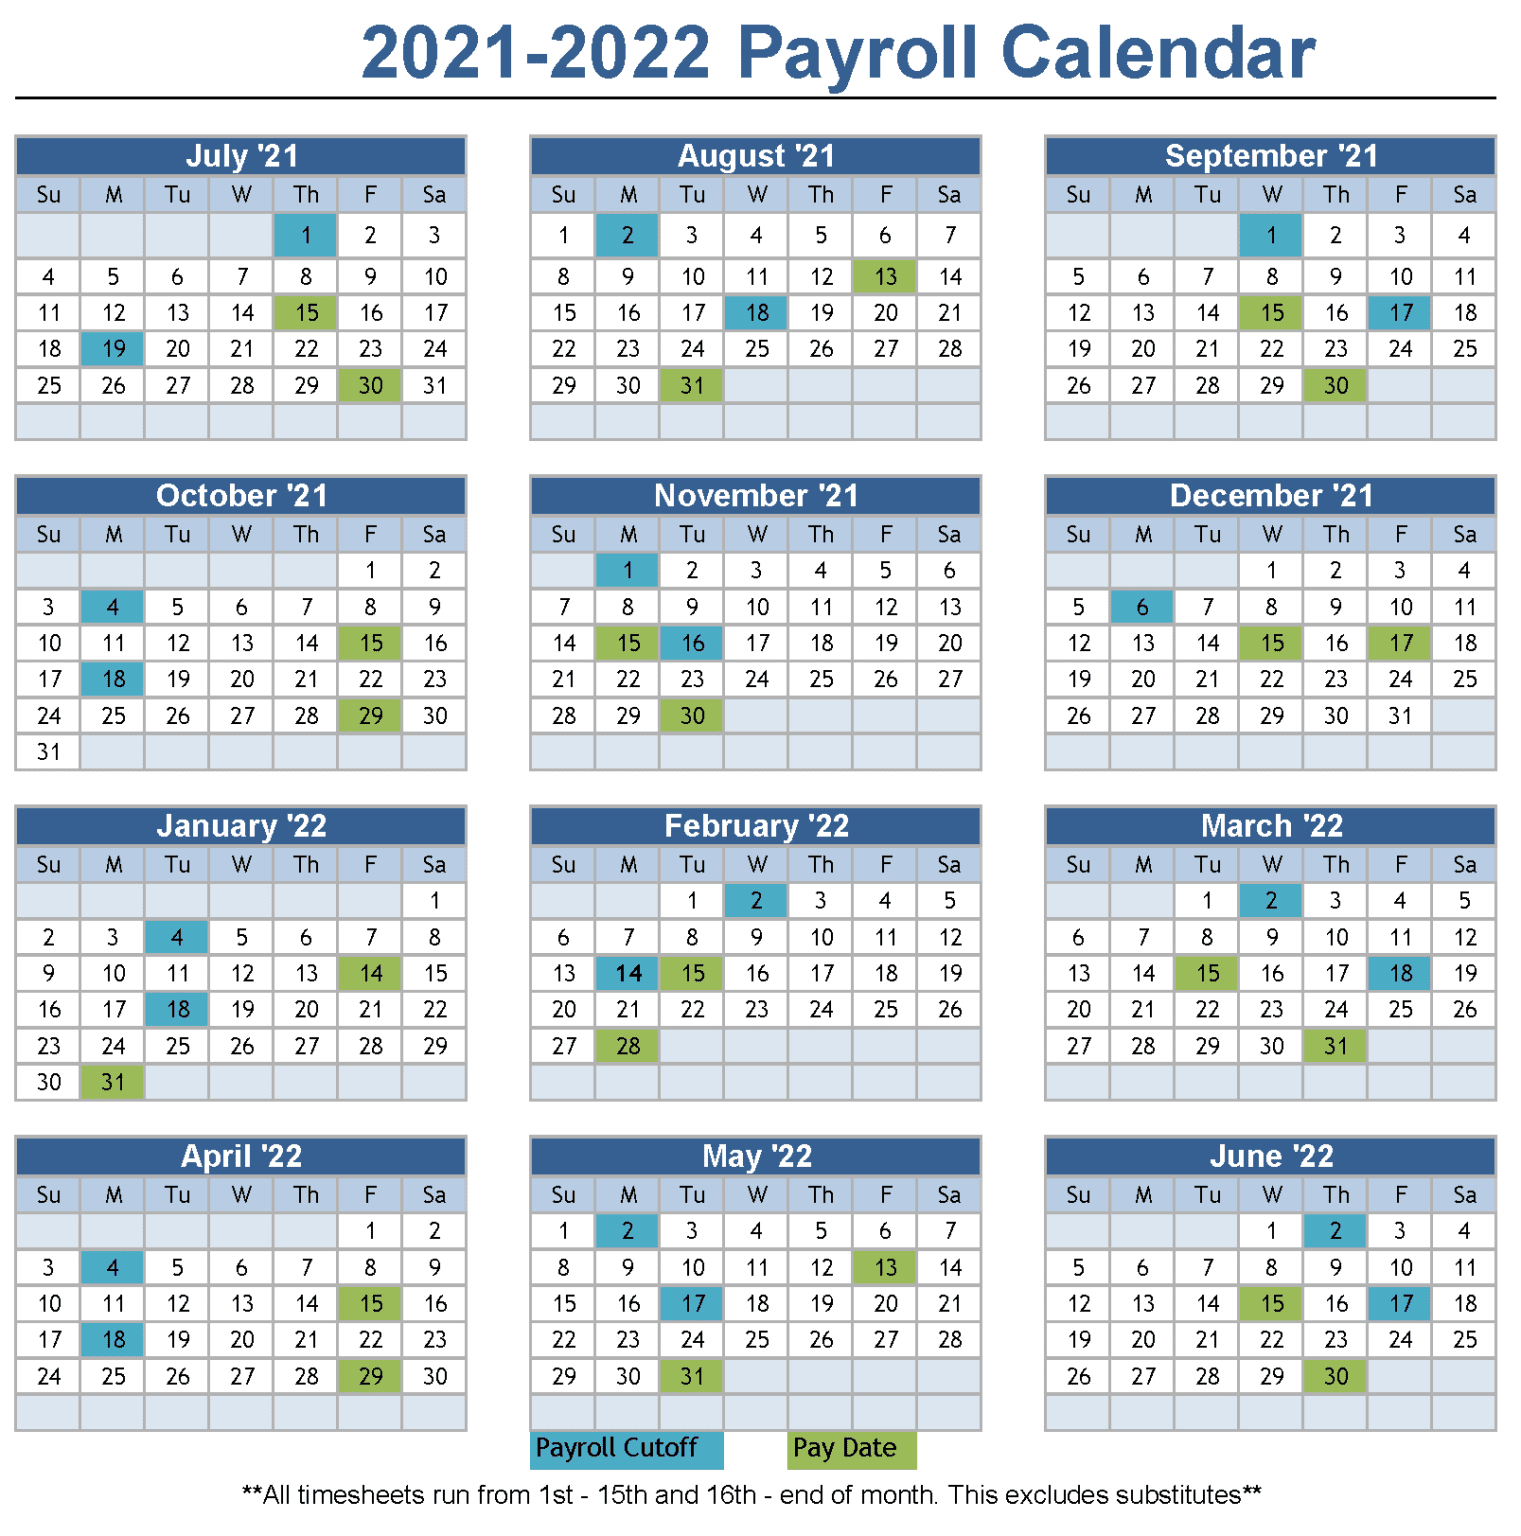 cummins-payroll-calendar-2022